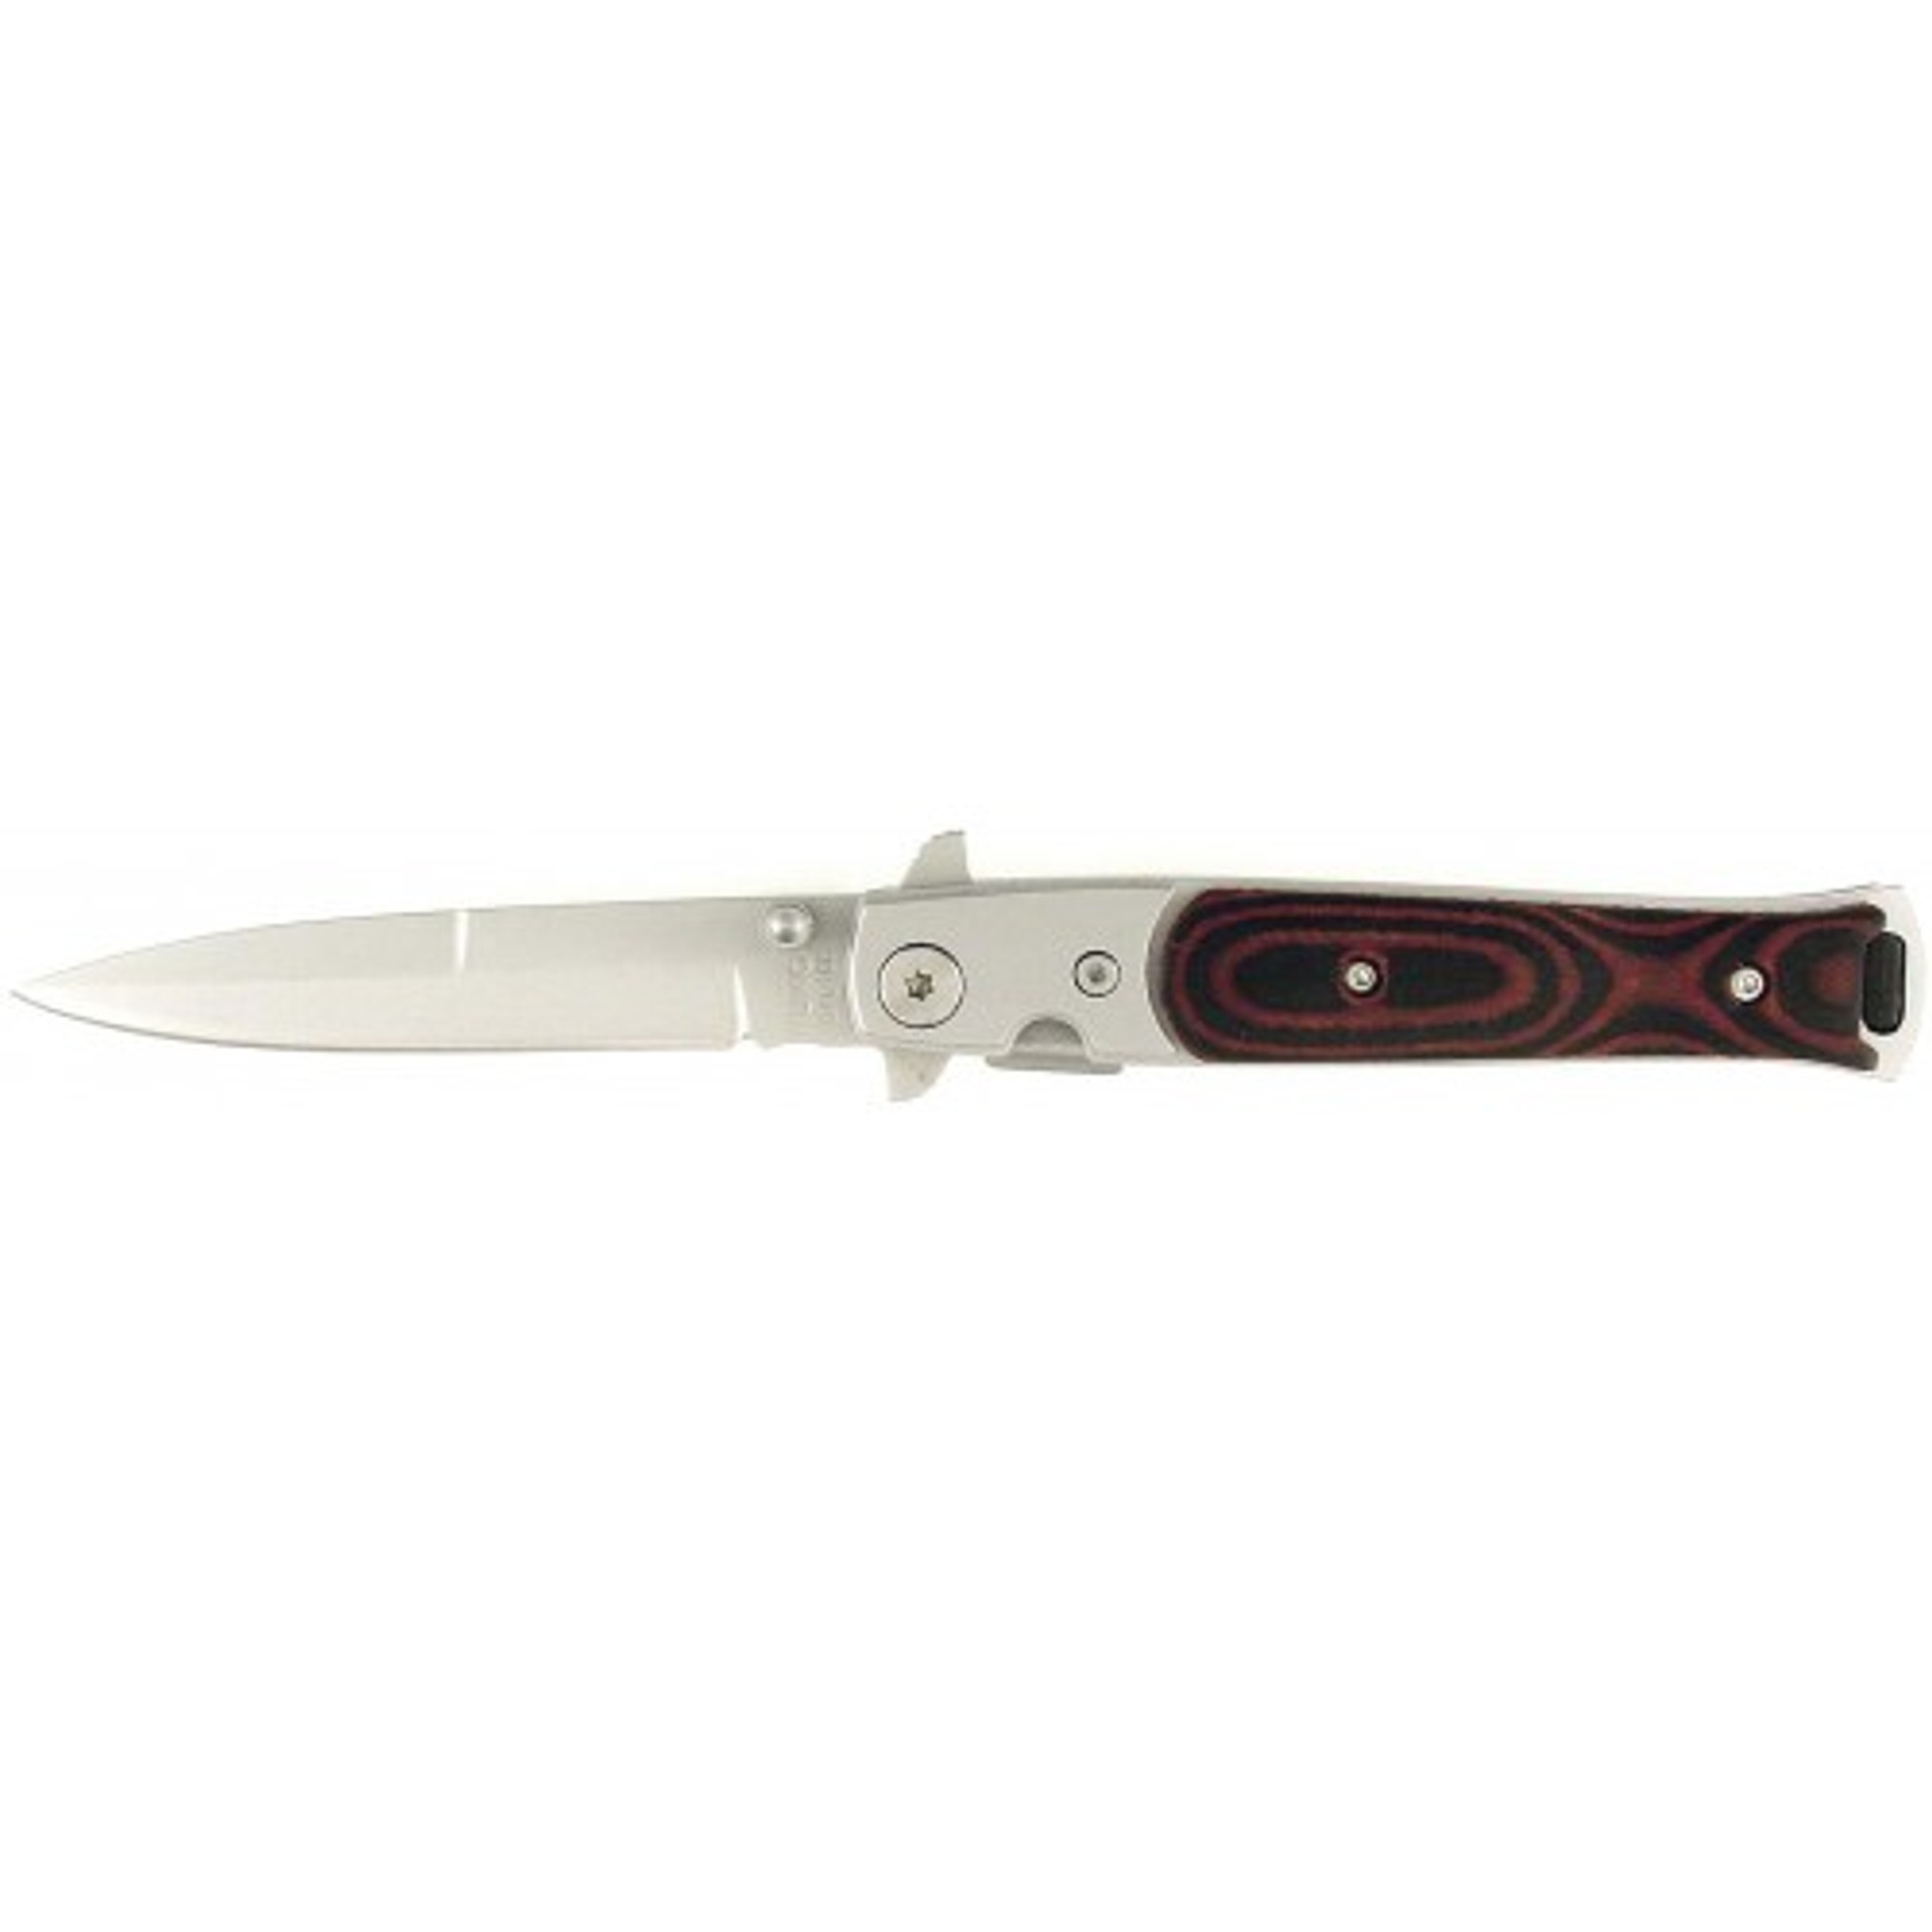 RUKO RUK0108, 440A, 3-1/4" Folding Blade Tactical Knife, Linen Micarta Handle